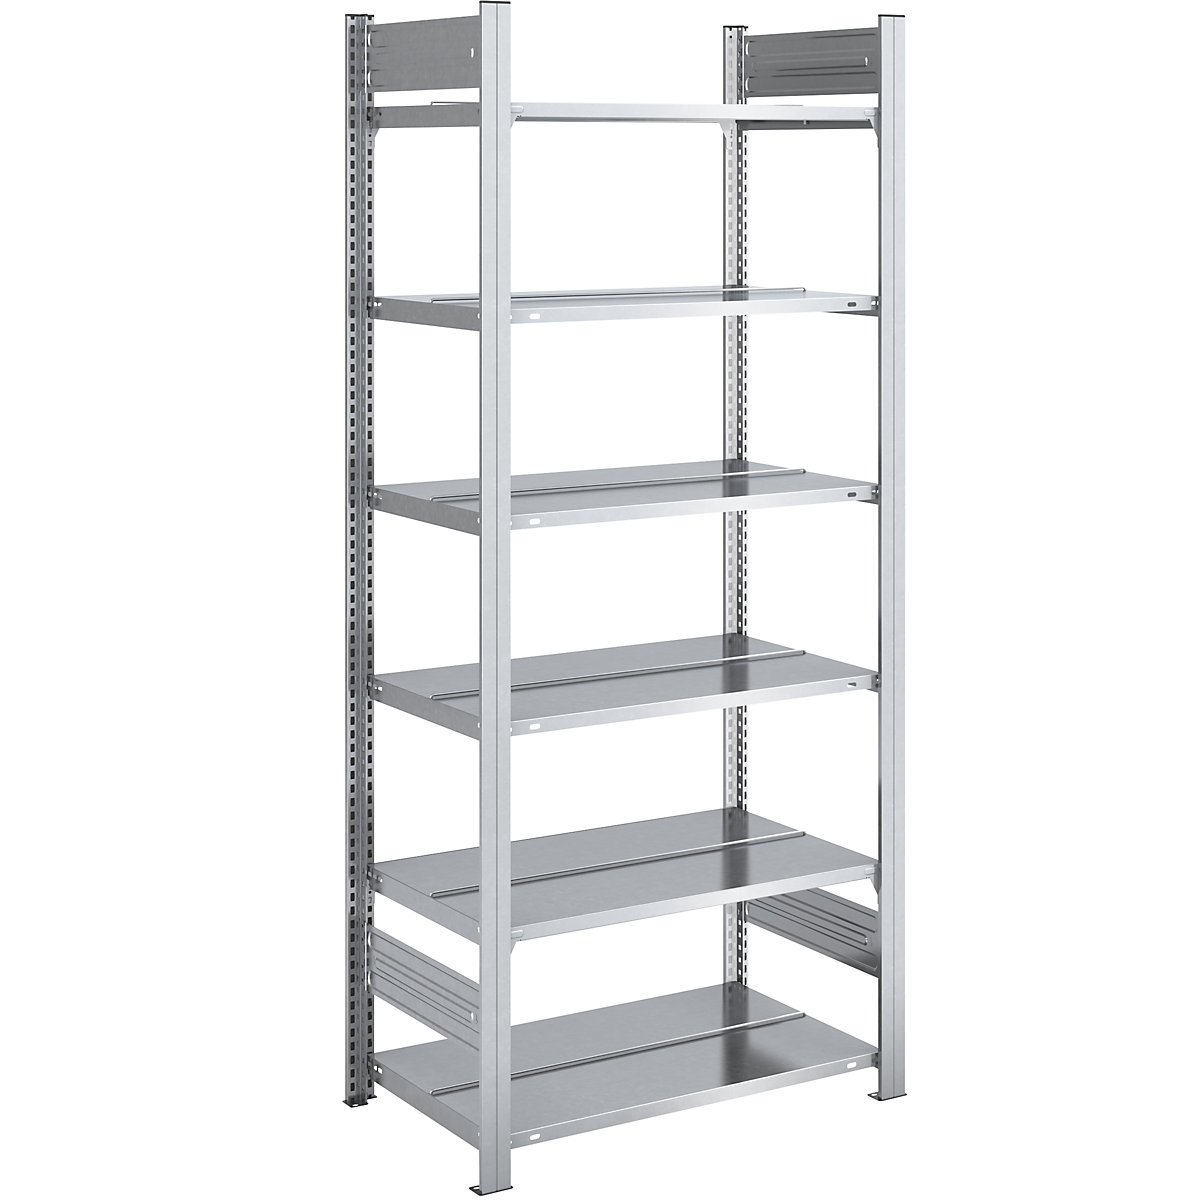 Boltless filing shelf unit, zinc plated – hofe, shelf height 2000 mm, double sided, standard shelf unit, WxD 750 x 600 mm-4